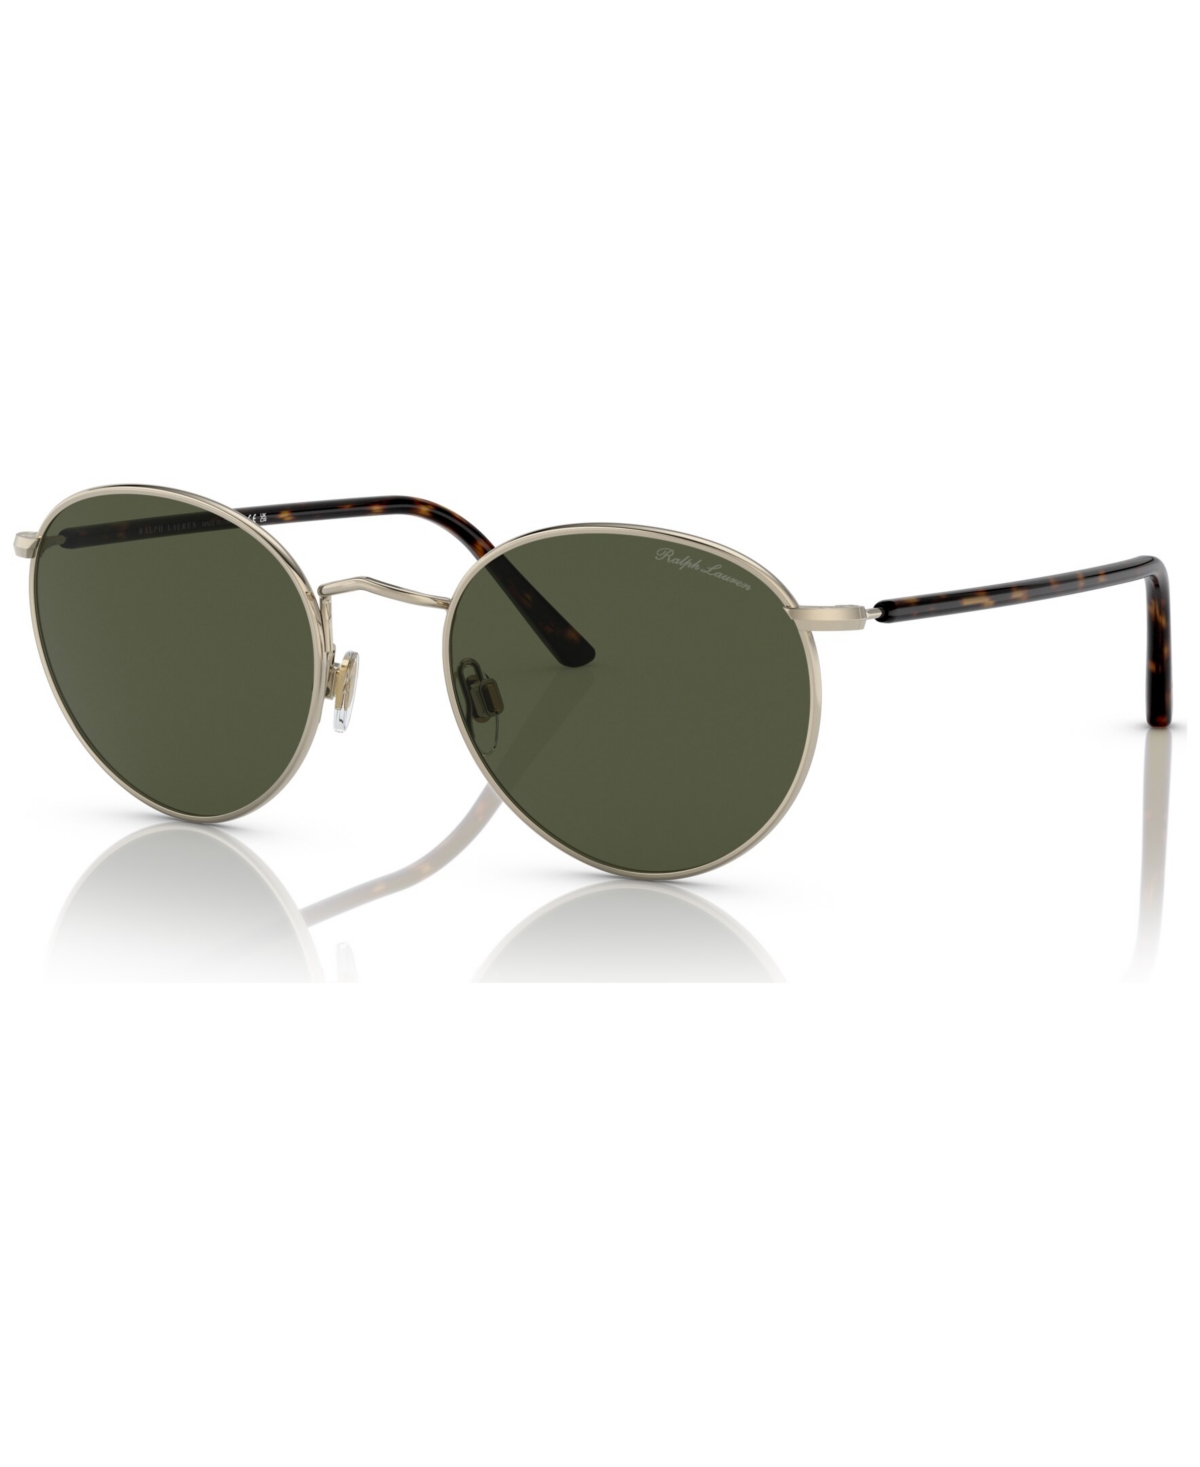 Ralph Lauren Men's Sunglasses, Rl707651-x In Shiny Pale Gold-tone